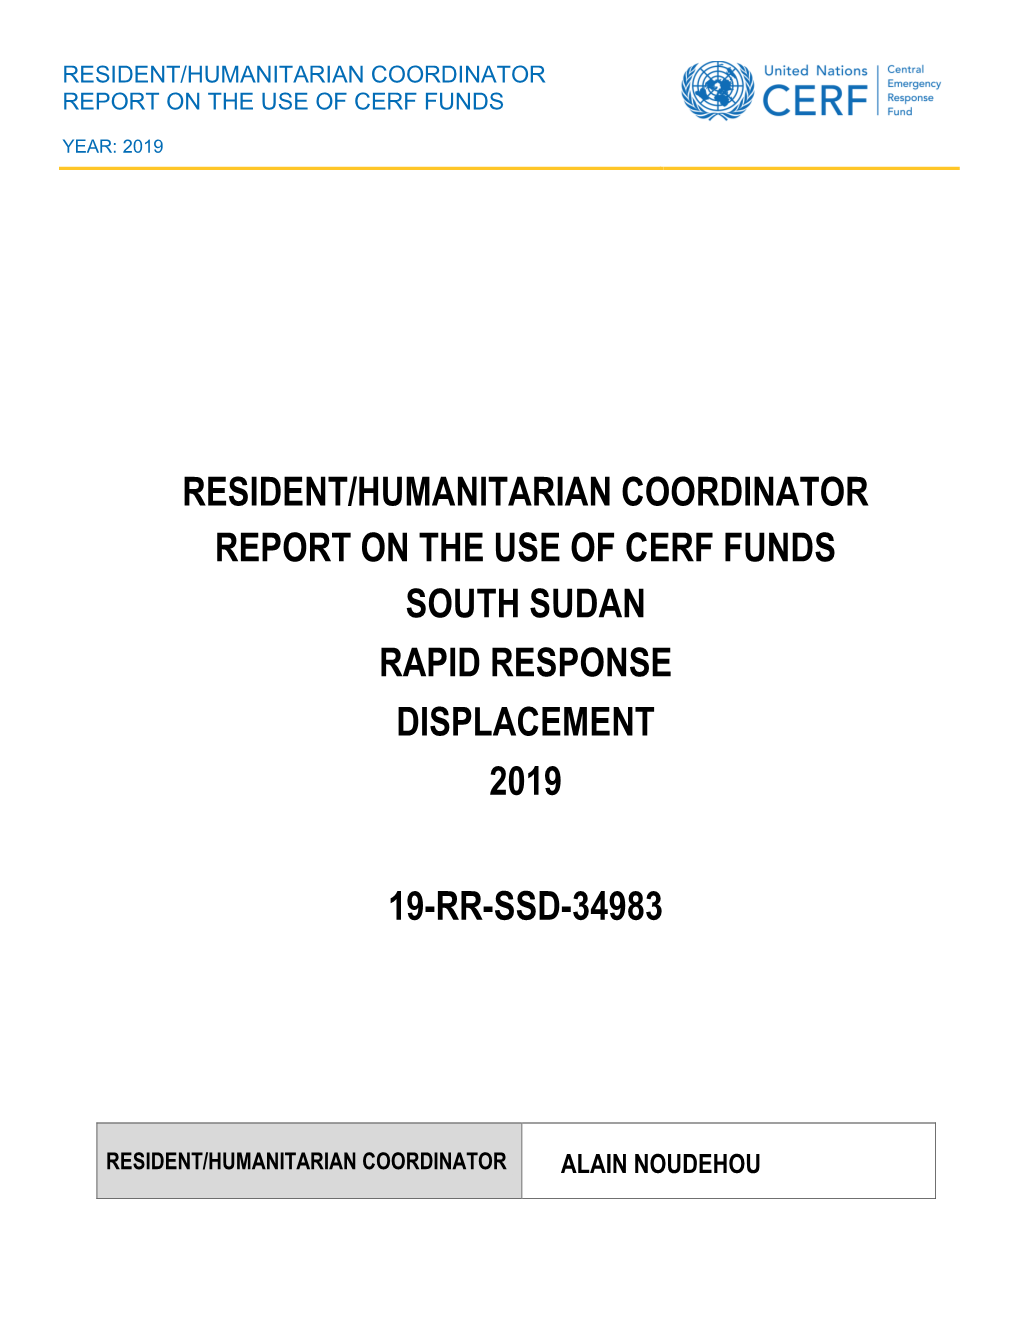 South Sudan Rapid Response Displacement 2019